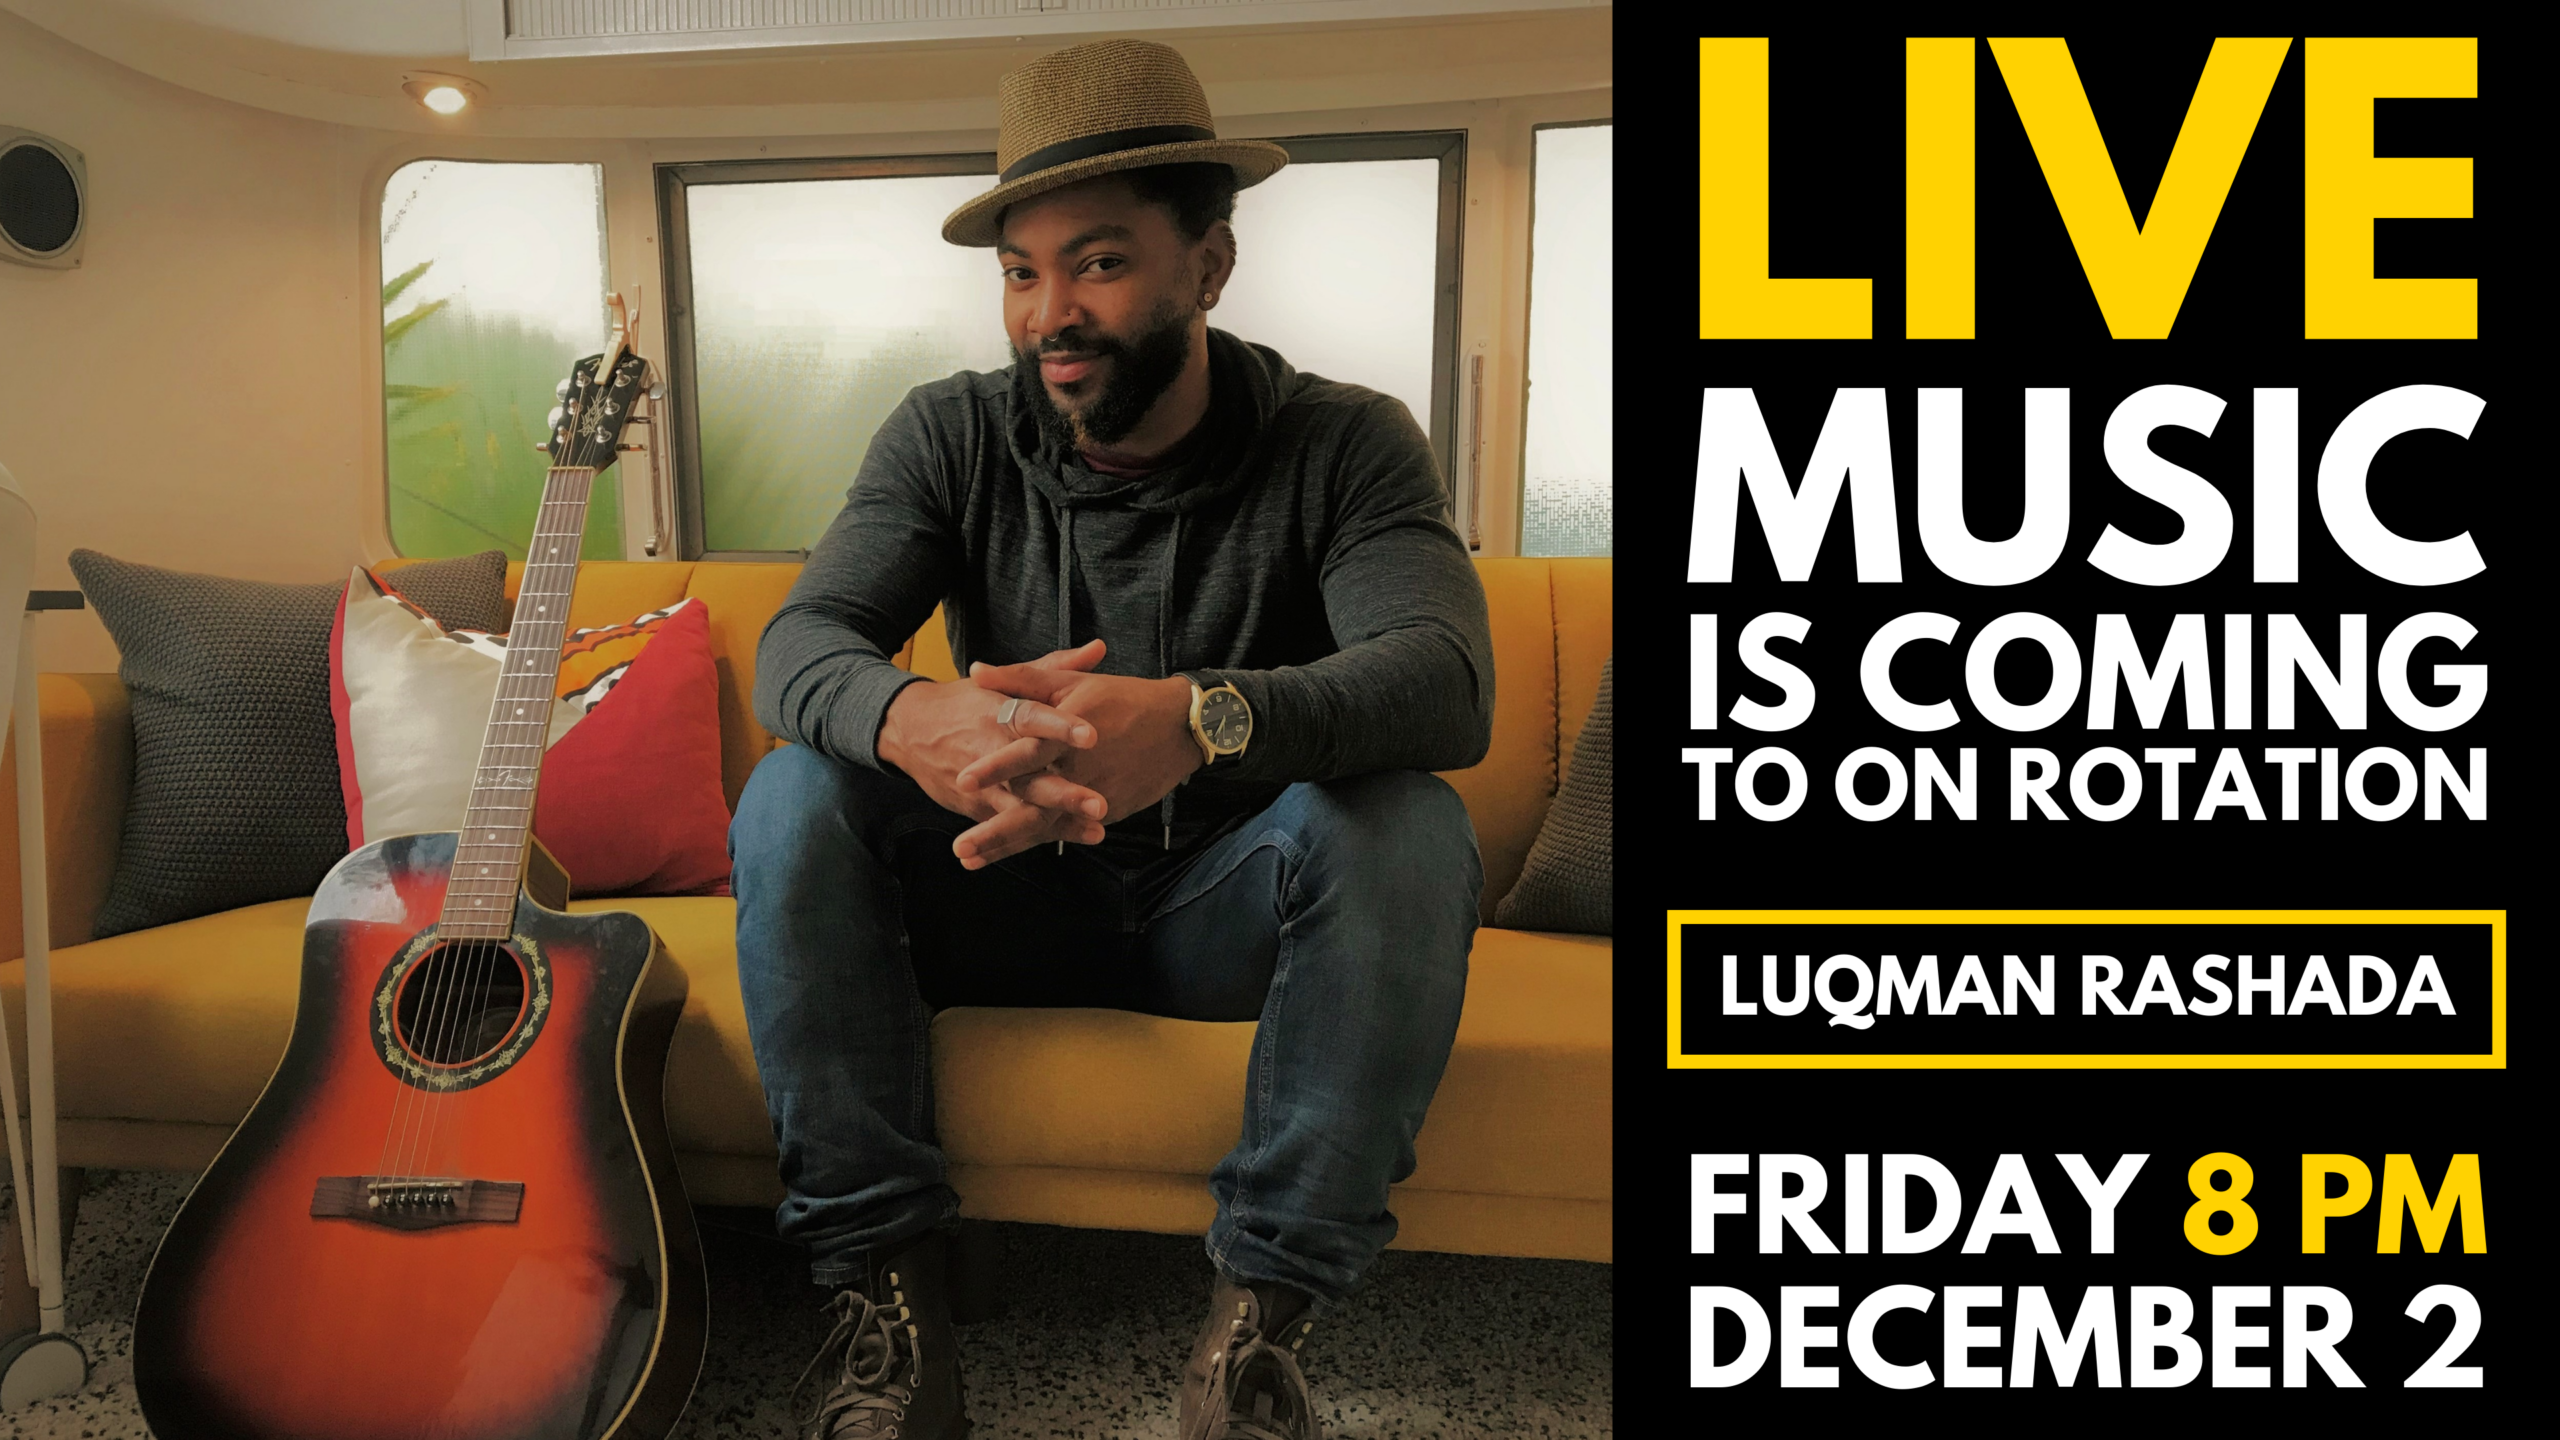 Luqman Rashada to perform live at On Rotation on December 2